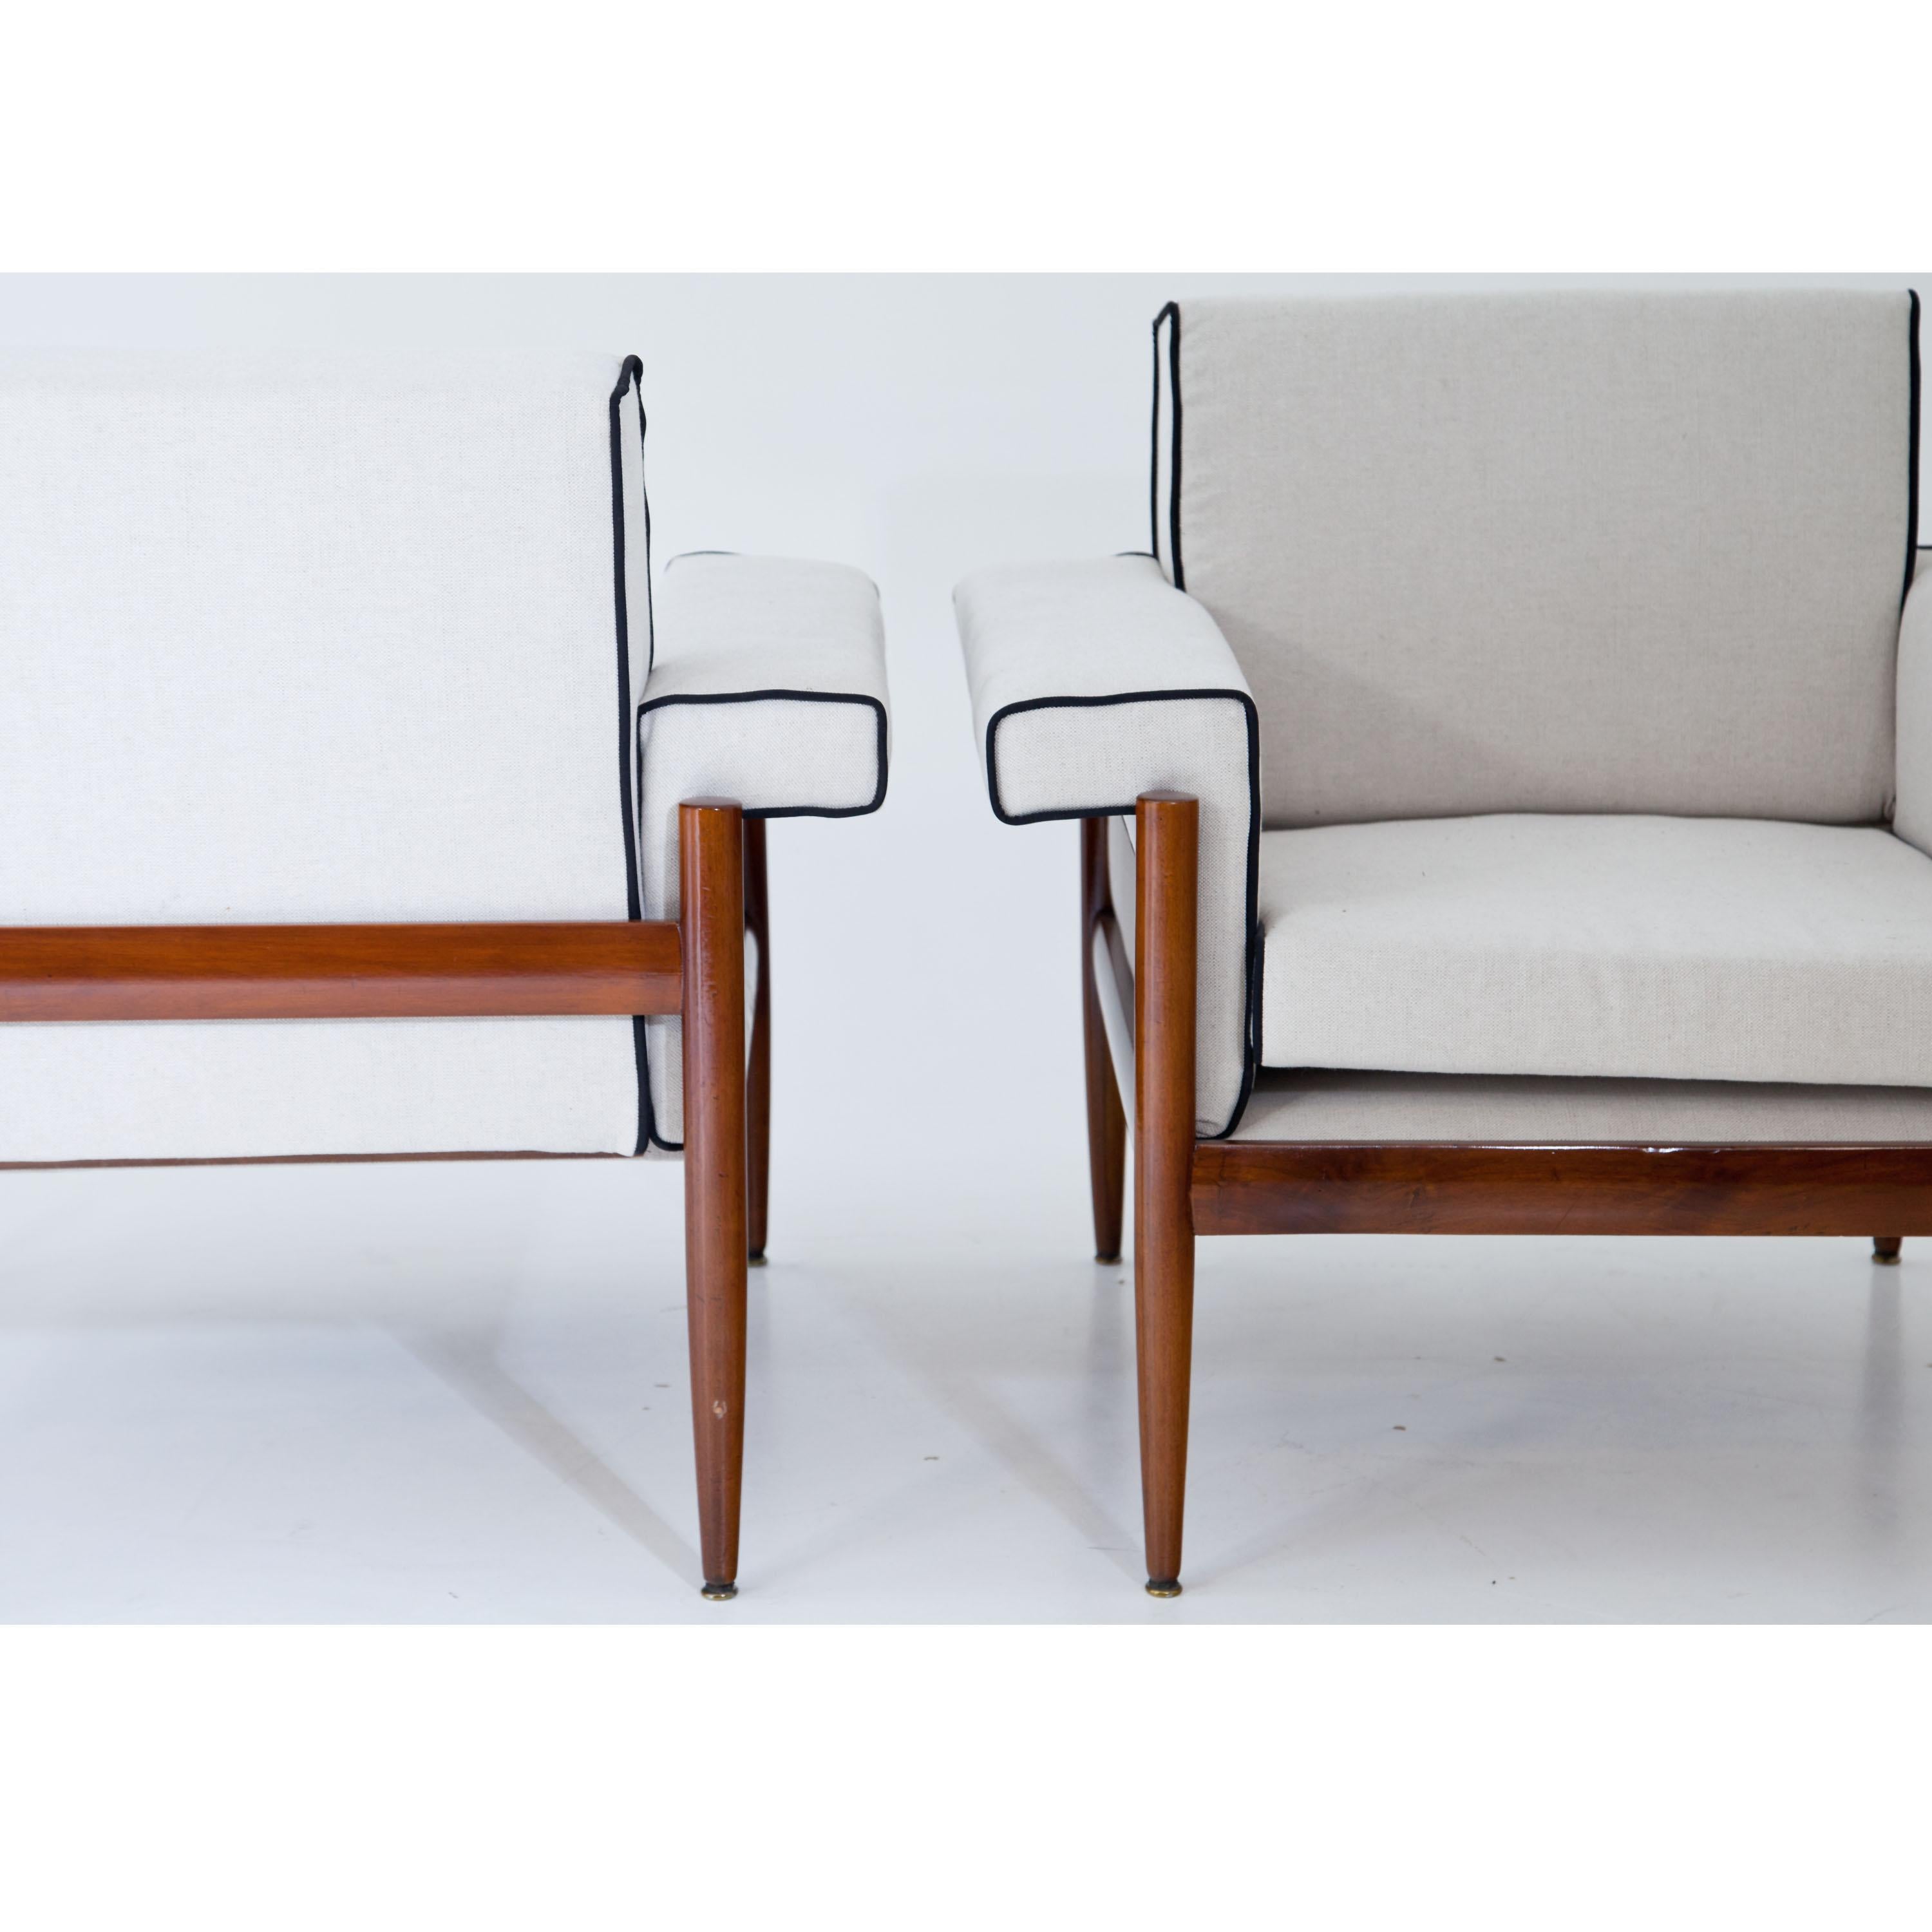 Pair of Italian Design Lounge Chairs, Trafilisa Isa Bergamo, Italy 1950s For Sale 3